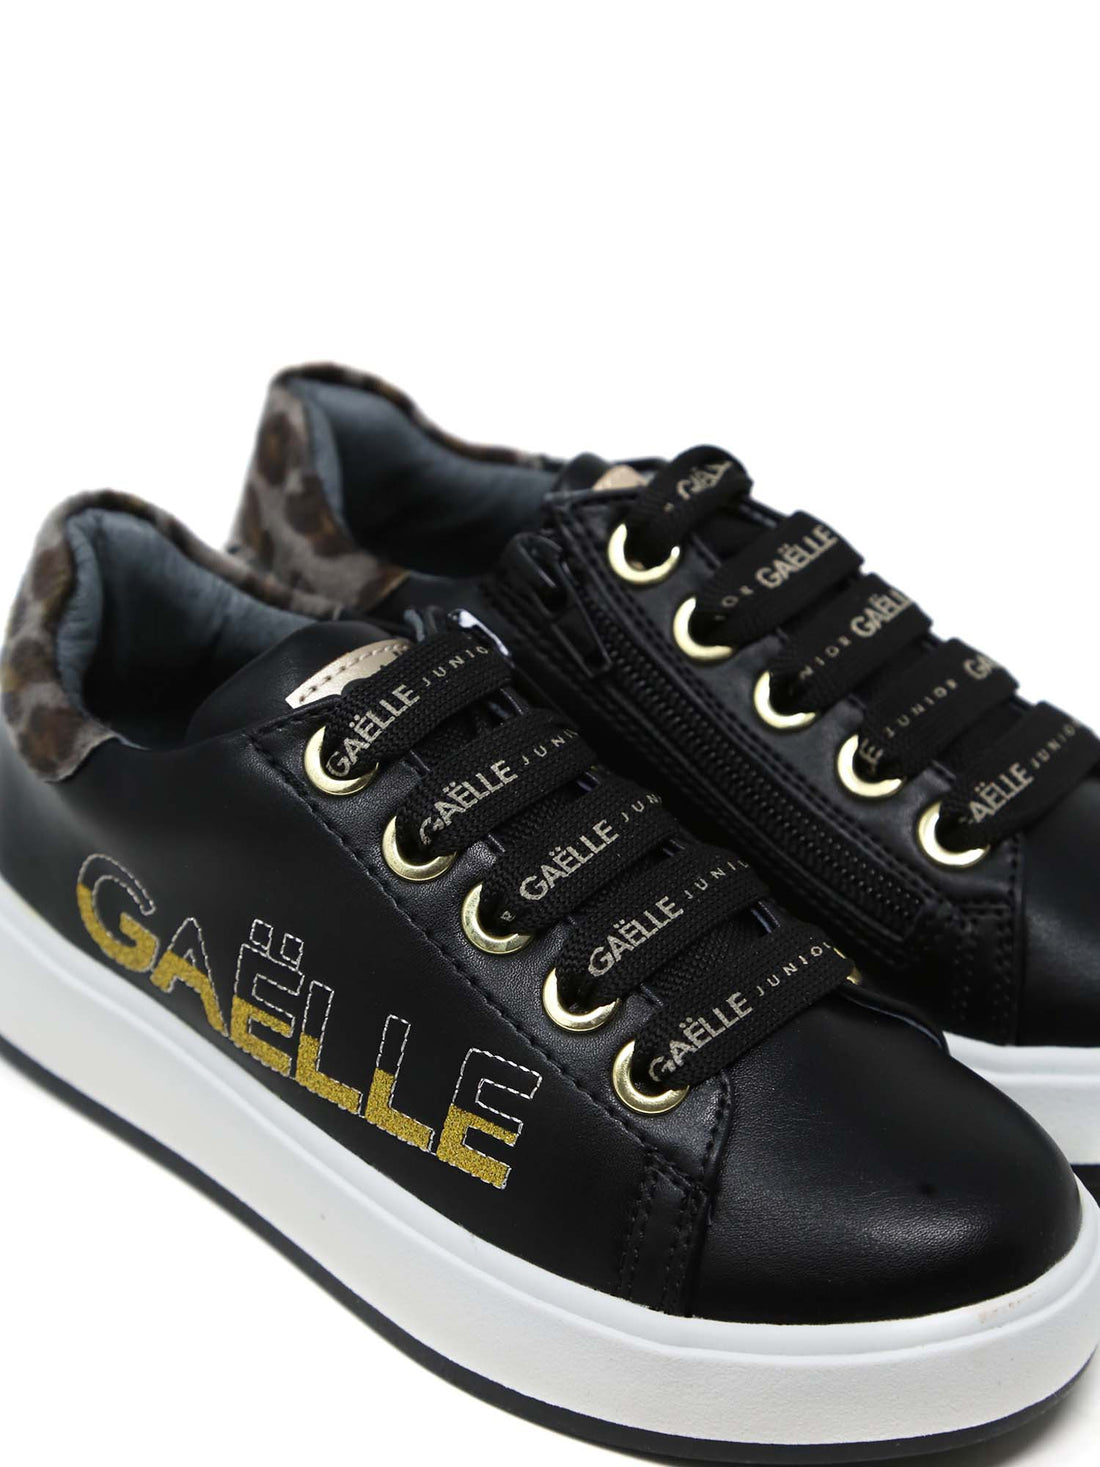 Sneakers Nero Gaelle